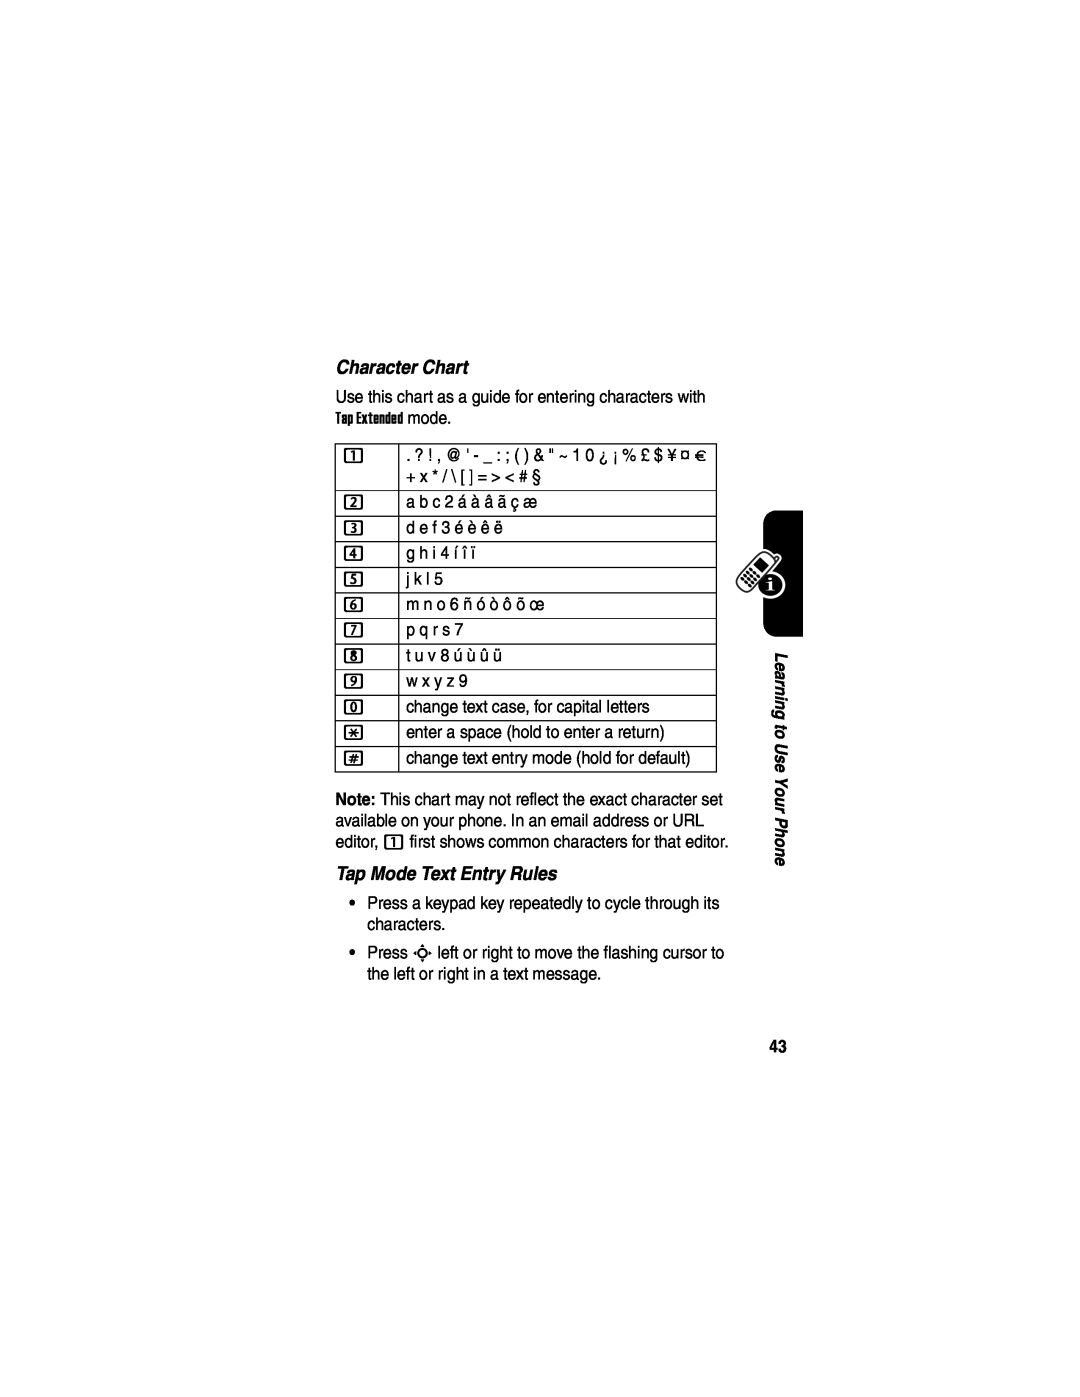 Motorola V635 manual Character Chart, Tap Mode Text Entry Rules 